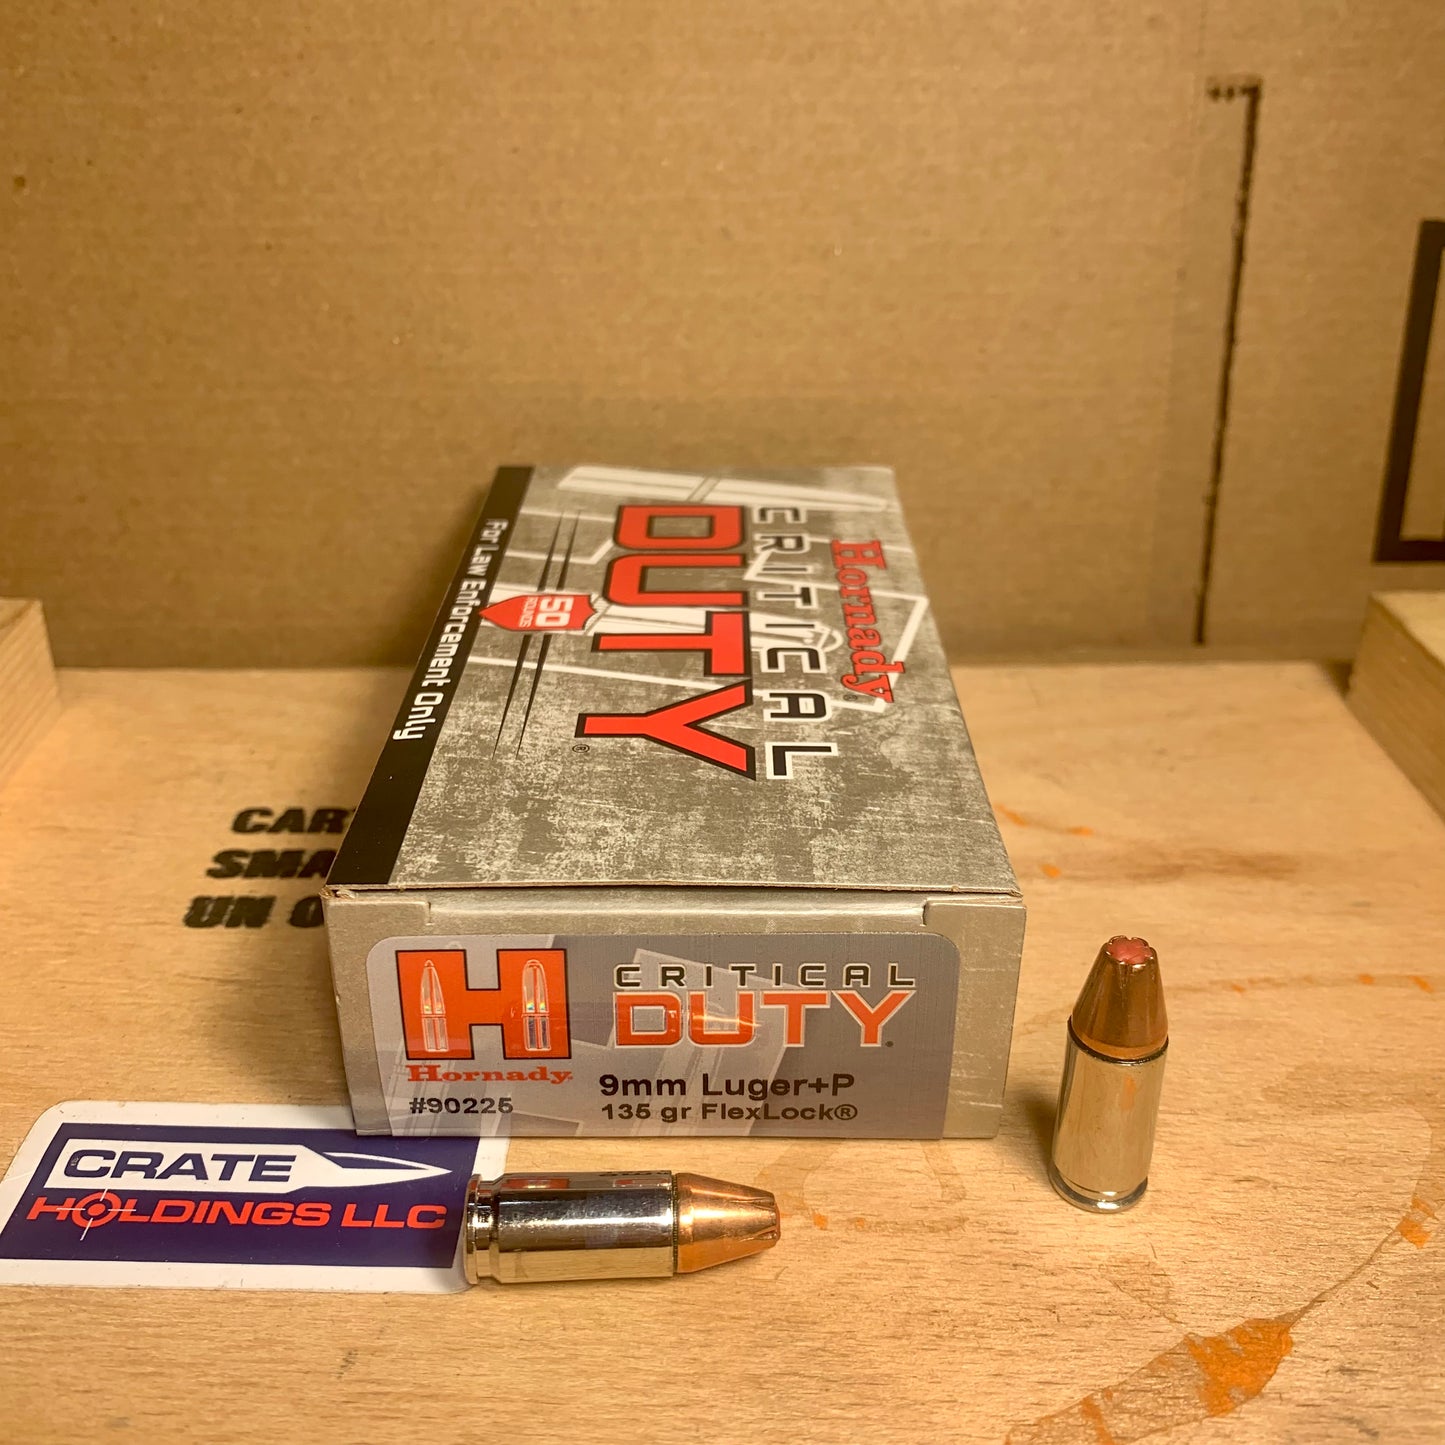 50 Round Box Hornady Critical Duty 9mm Luger +P Ammo 135gr FlexLock - 90225